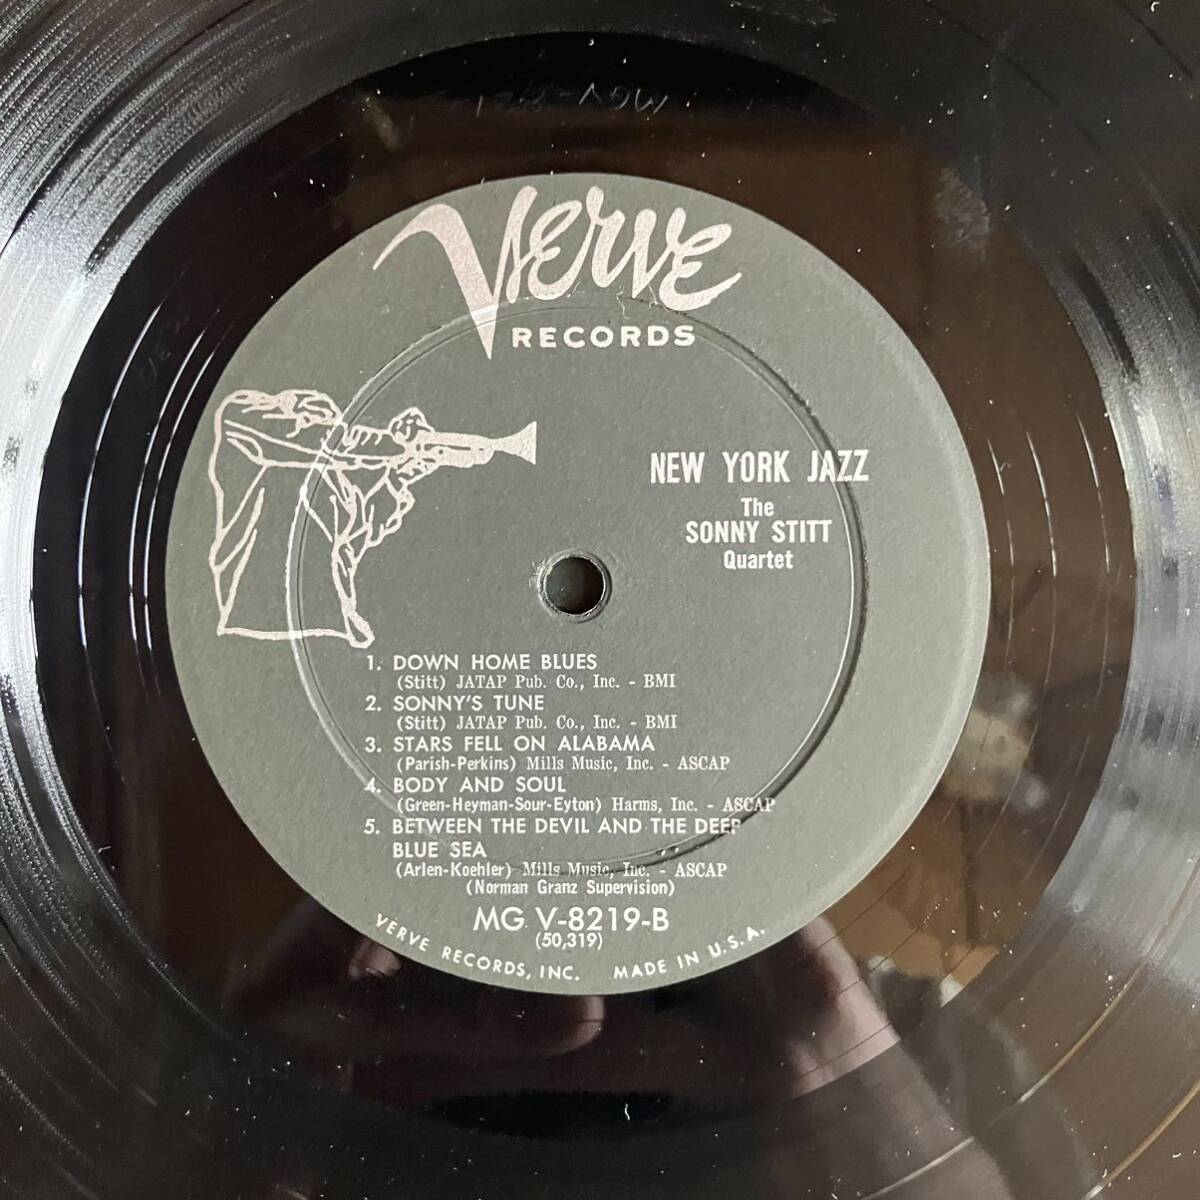 【US Original】 Sonny Stitt Quartet New York Jazz / Verve MG V-8219 / LP レコード / 盤綺麗です_画像5